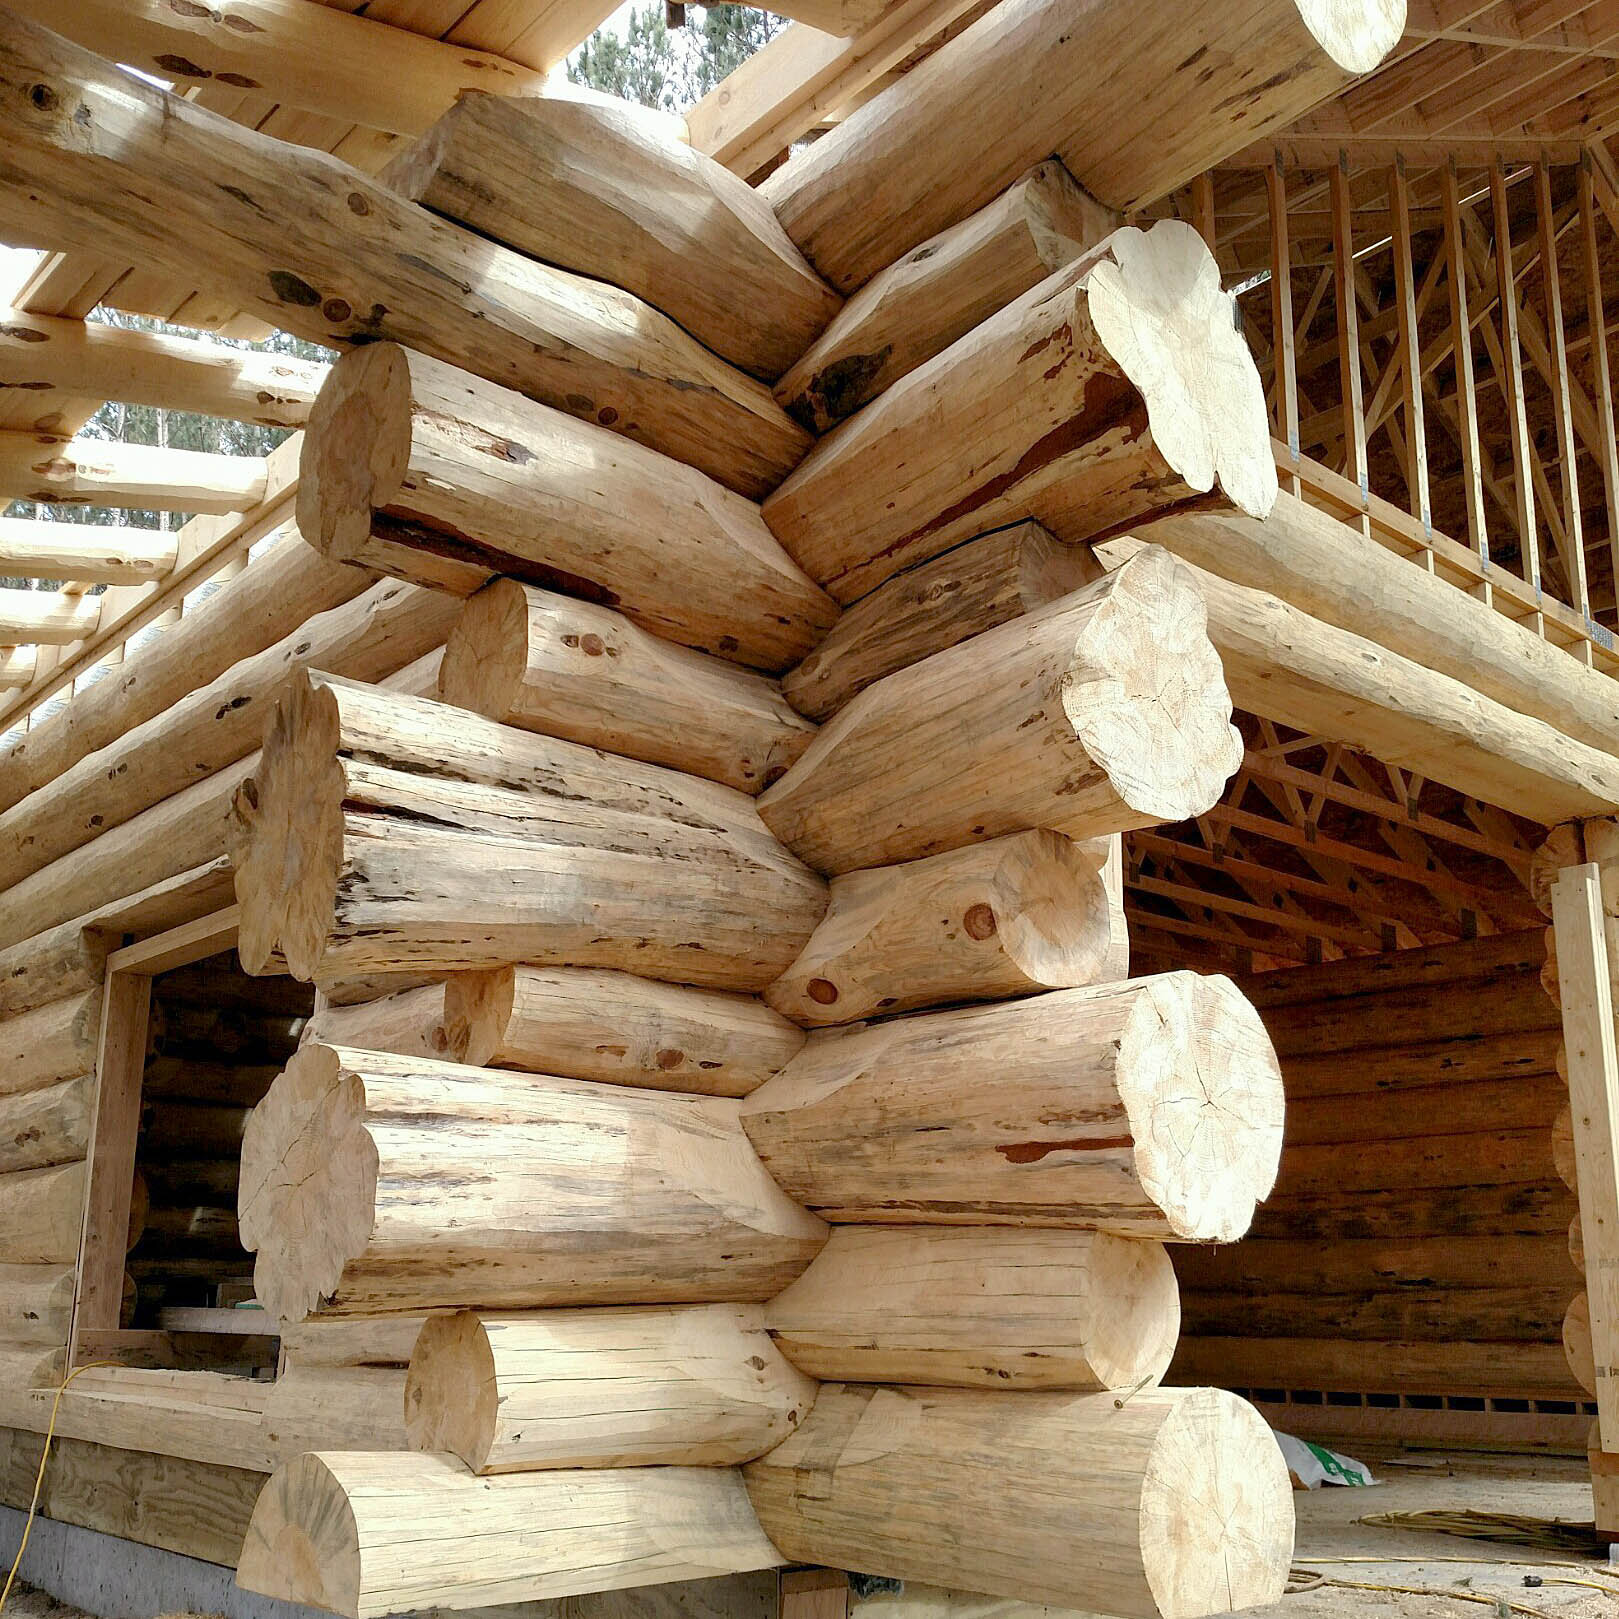 Backwoods Log Homes